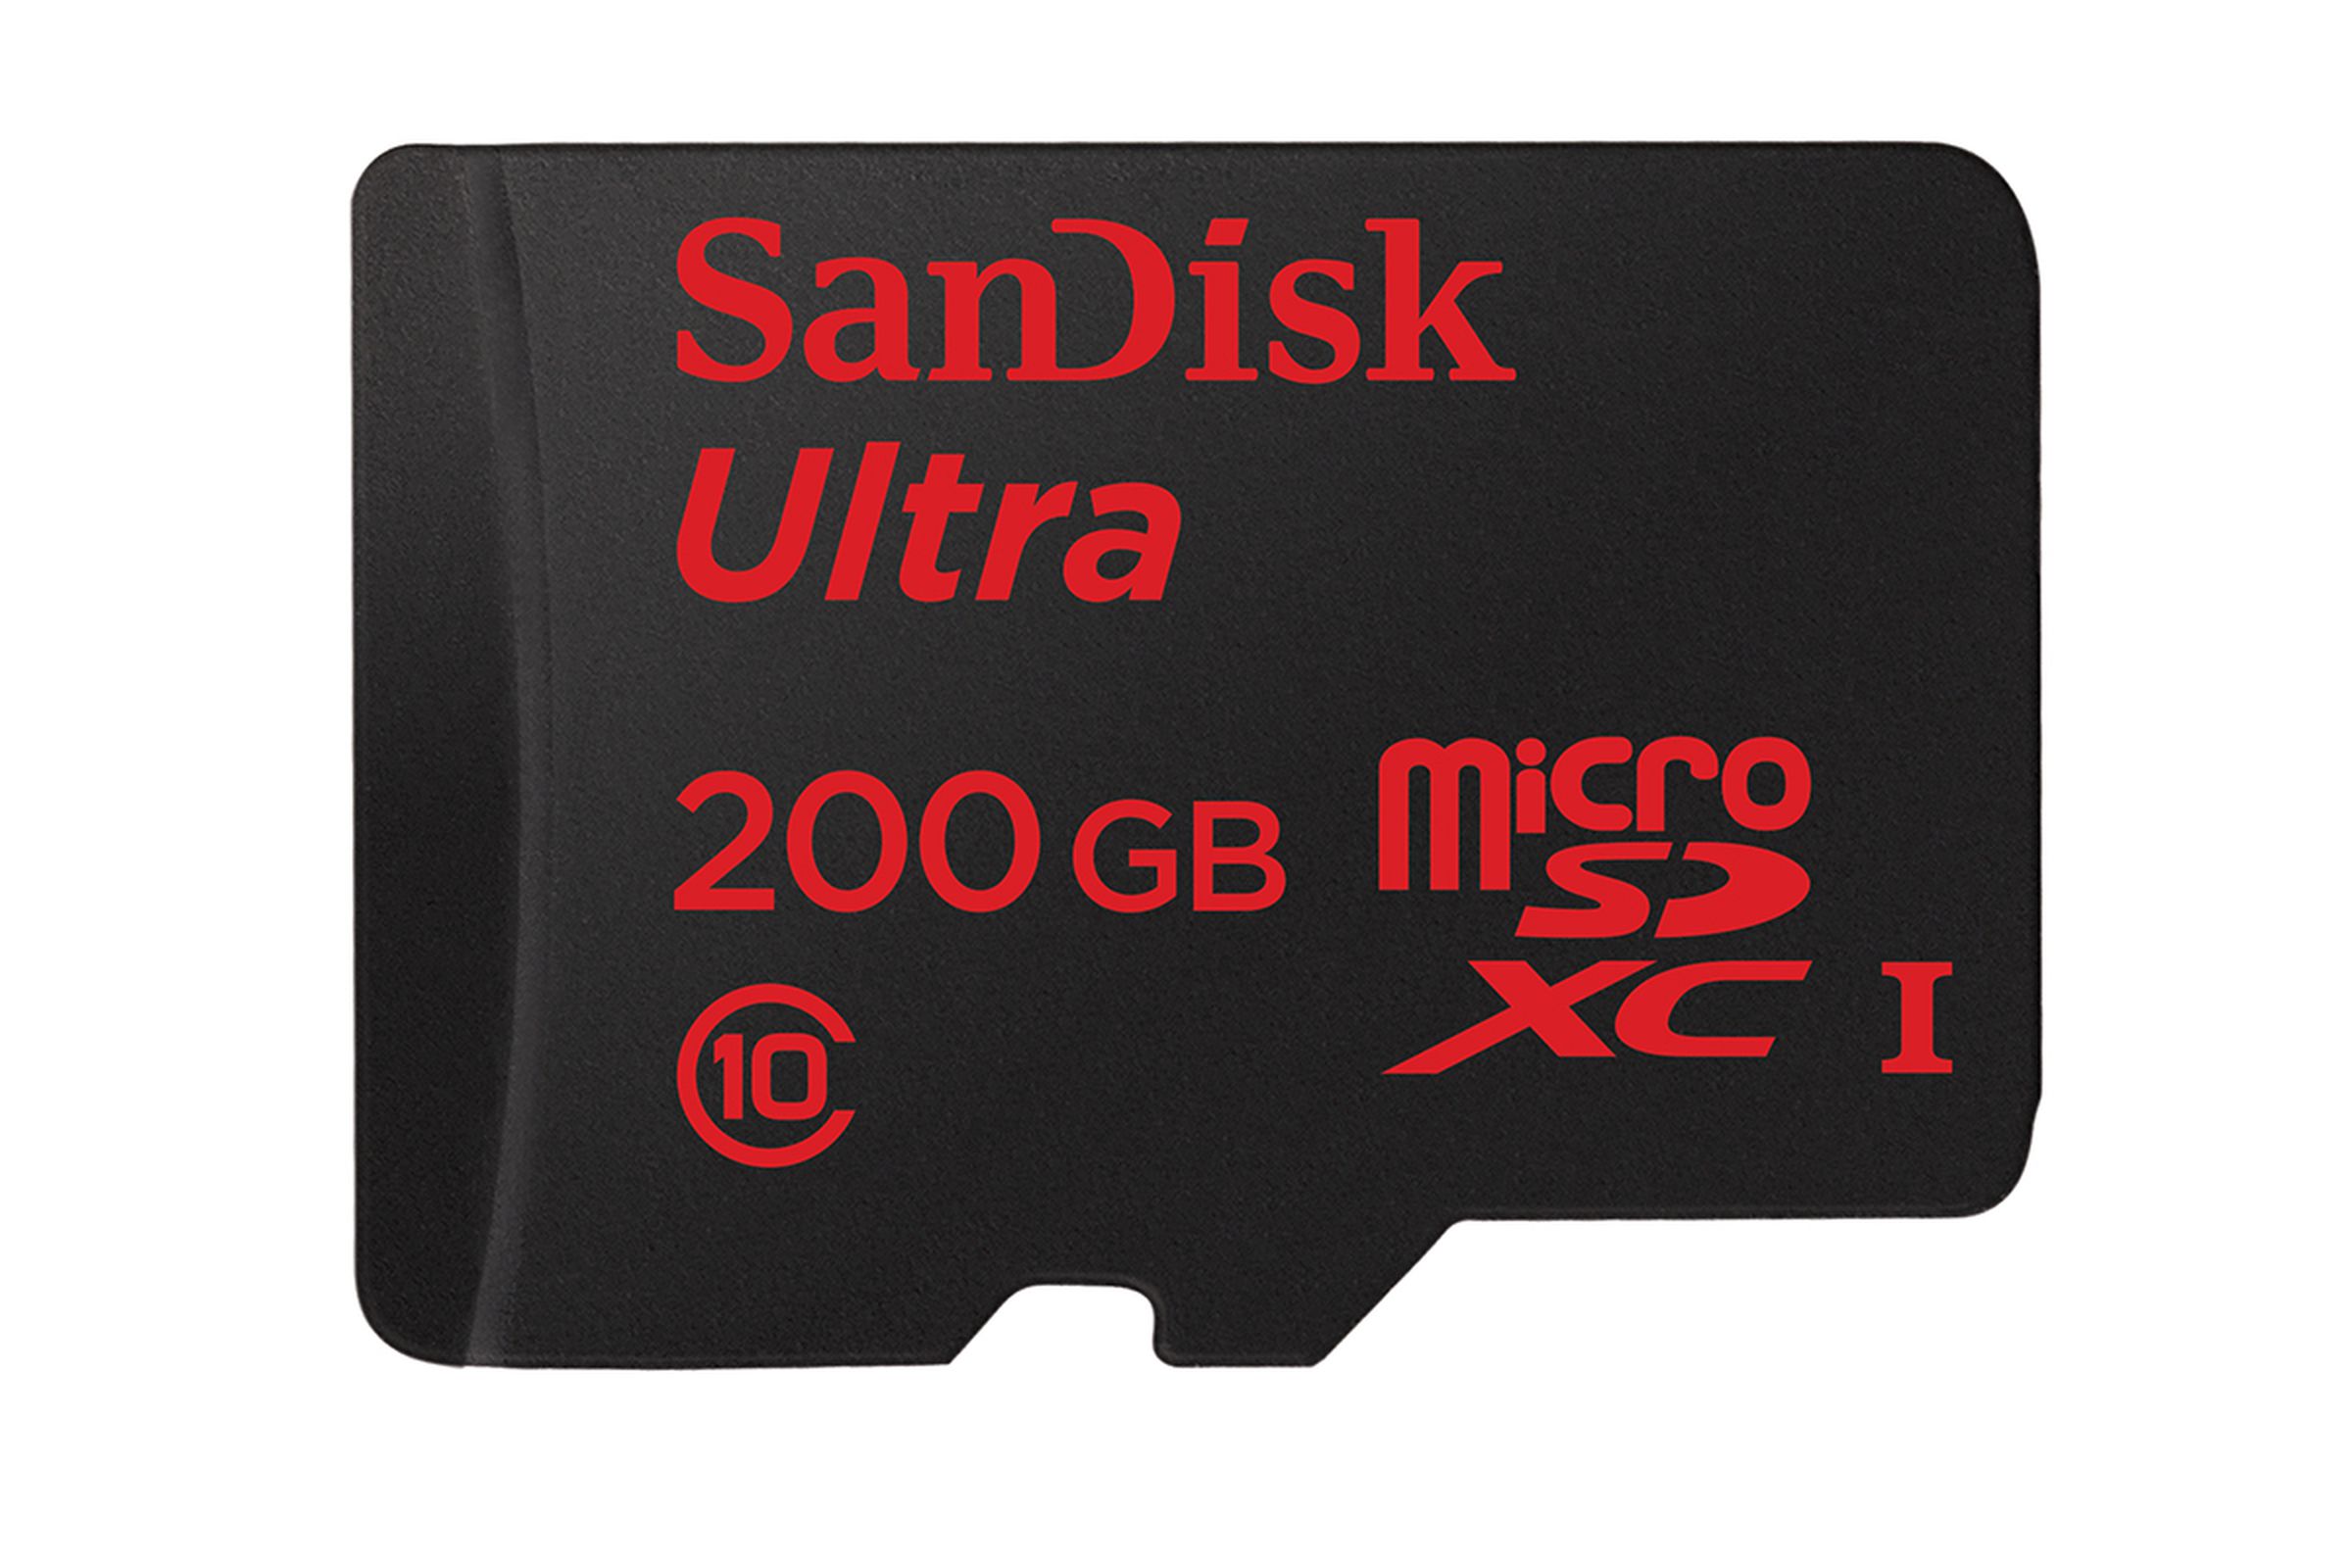 Камера микро сд. SANDISK Ultra 128gb MICROSDXC. SD Card 200 GB. Карта памяти SANDISK extreme Pro MICROSDXC 200/90 MB/S 128gb. SANDISK extreme 128gb SDXC Card UHS-3 class 10 80mb/s.